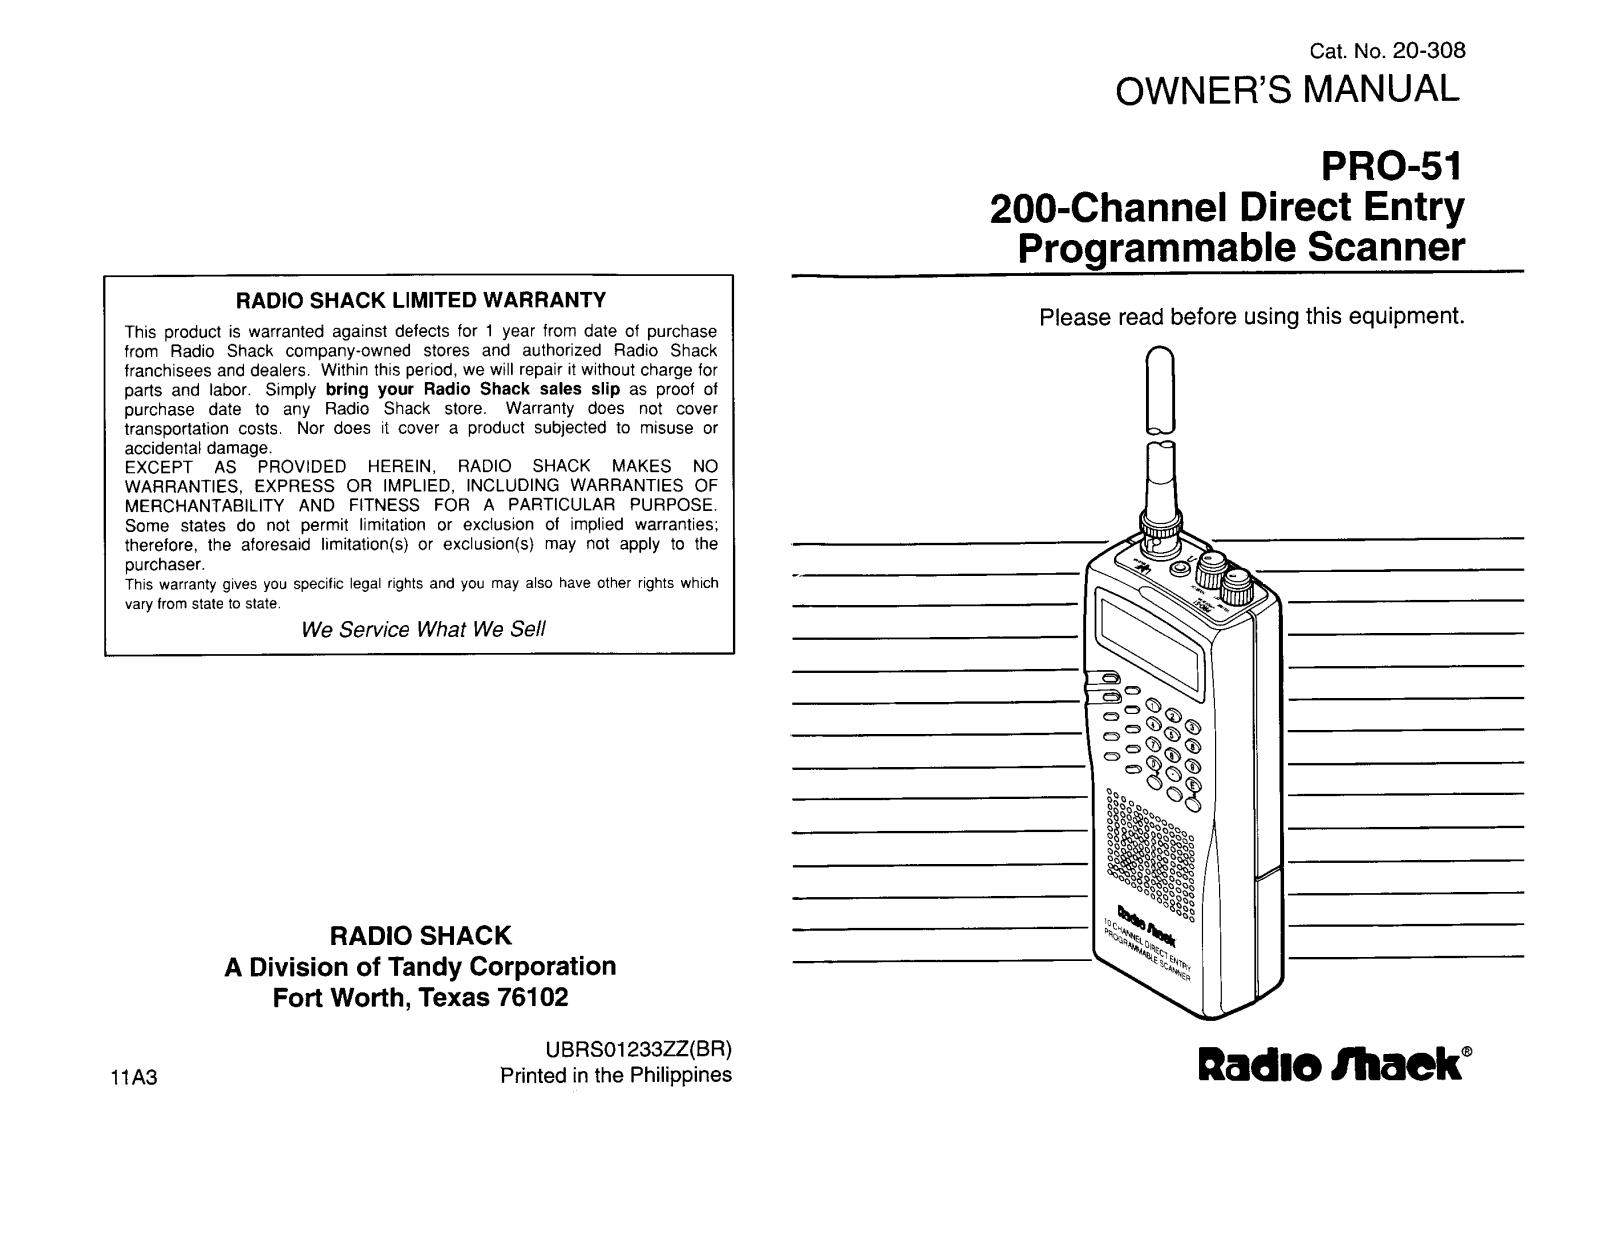 RadioShack PRO-51 Owners Manual